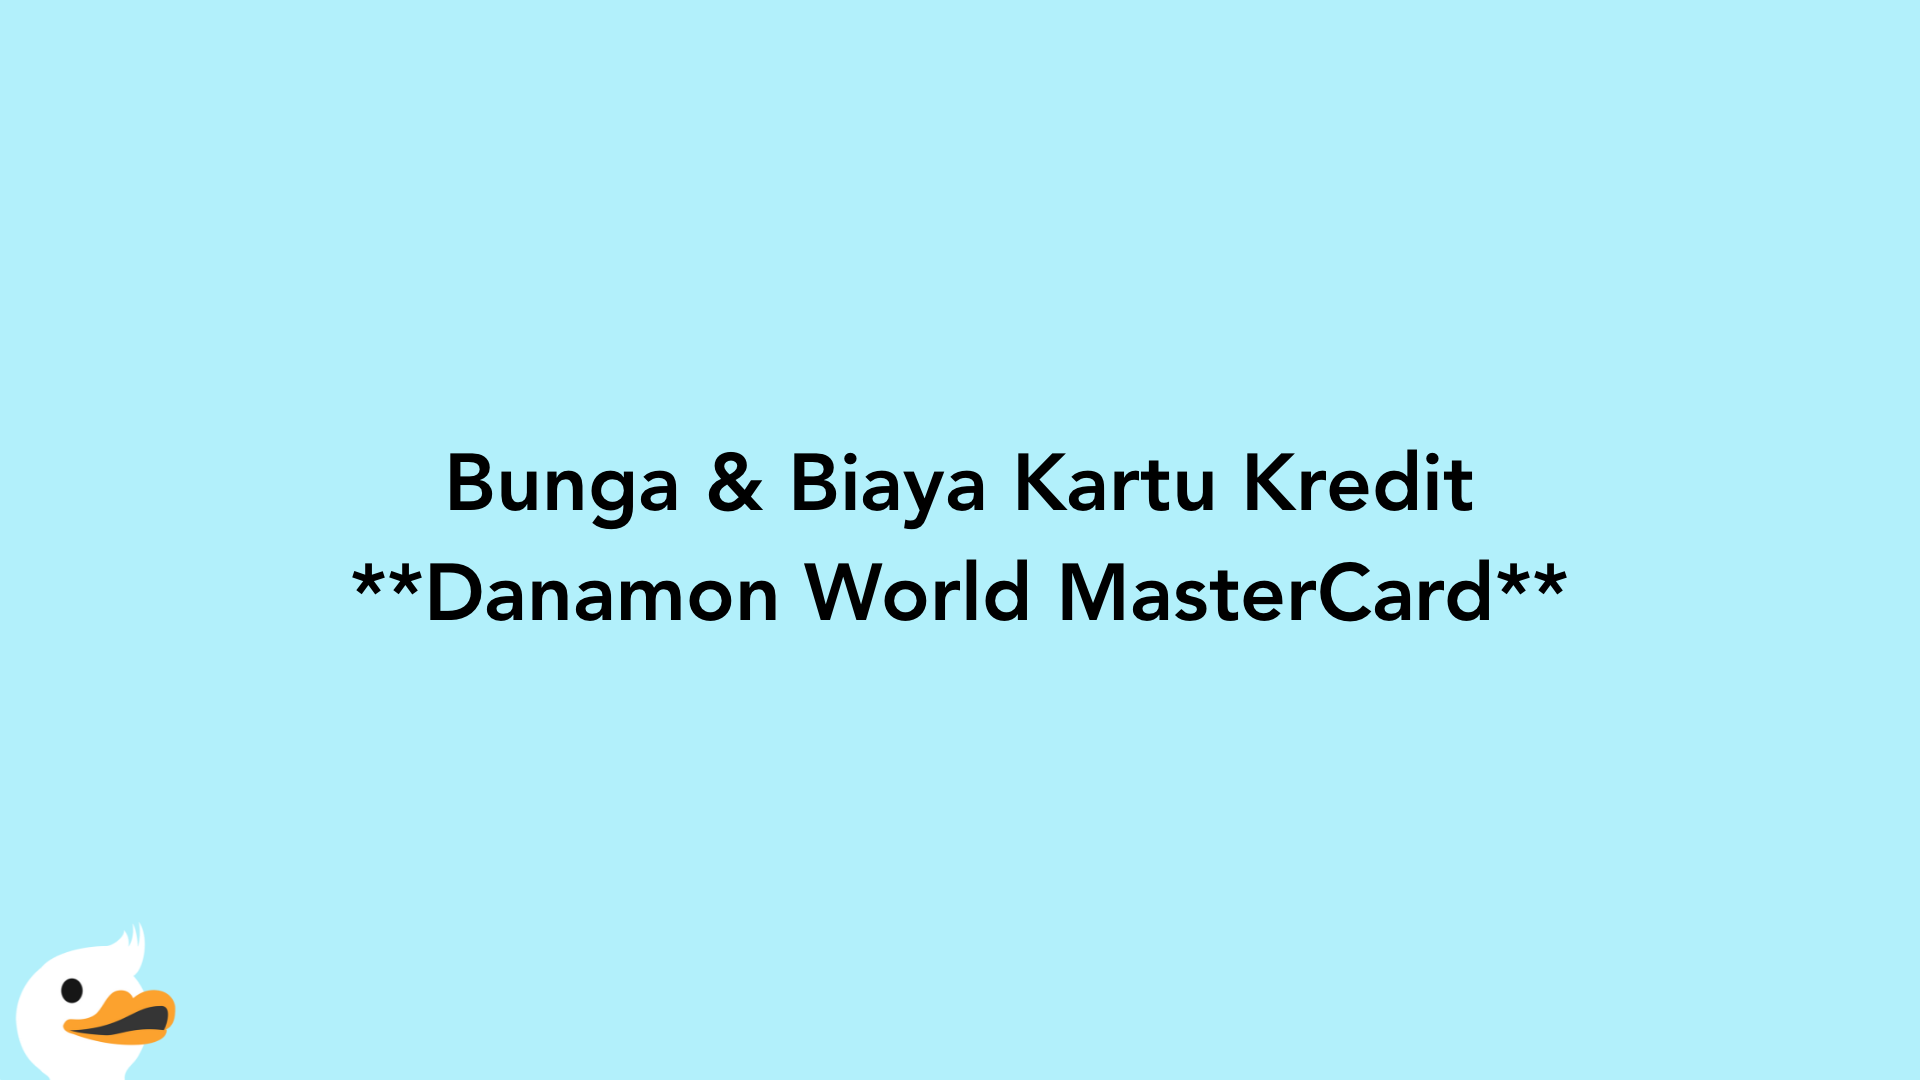 Bunga & Biaya Kartu Kredit Danamon World MasterCard